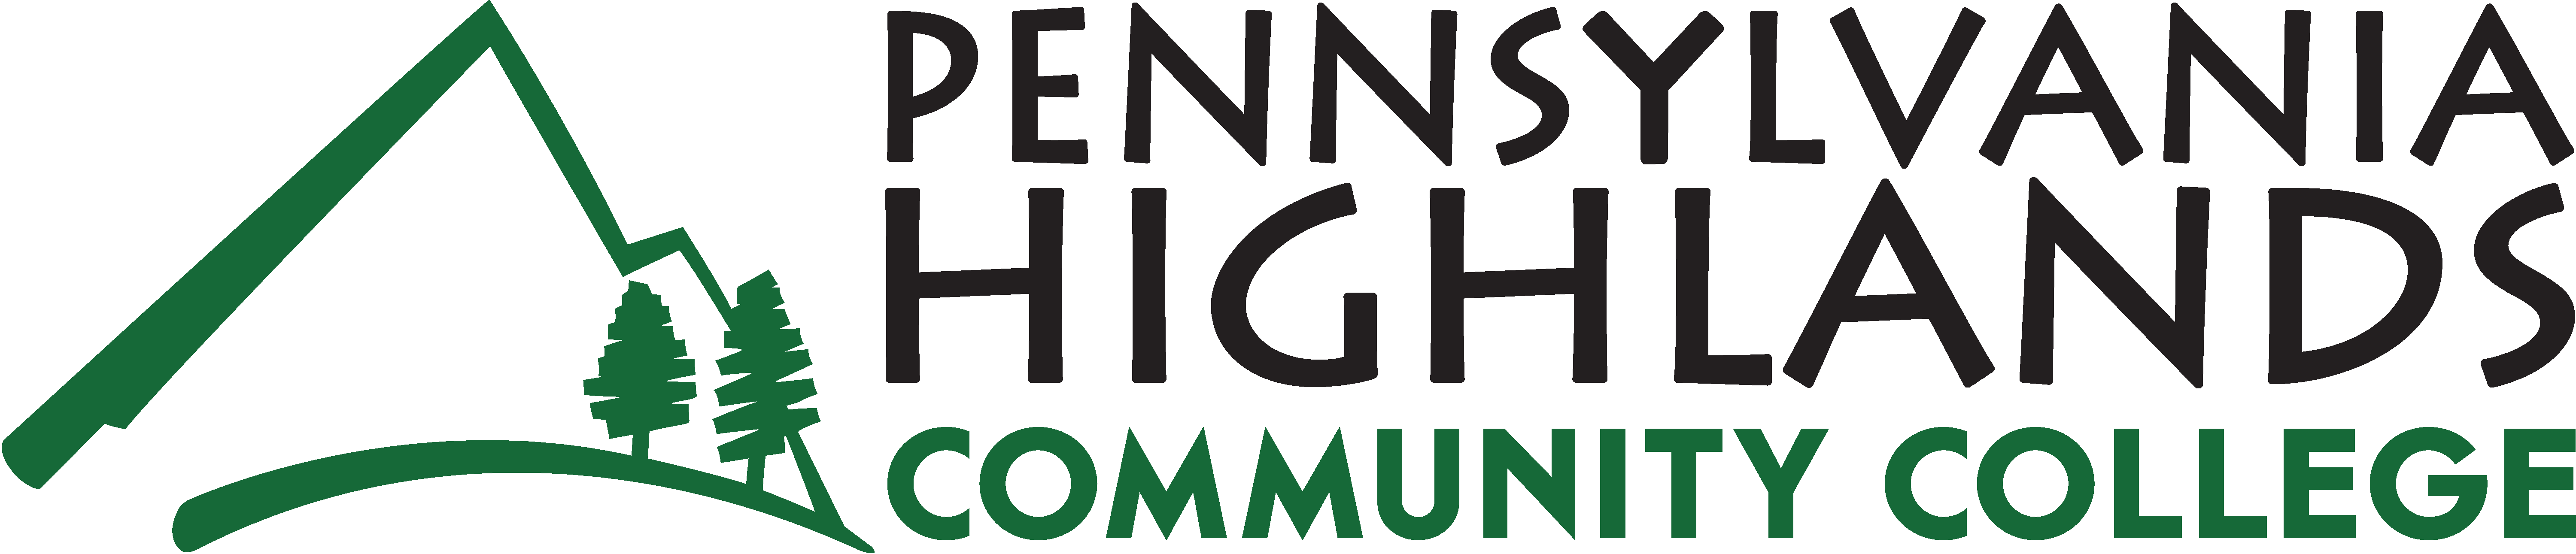 Pennsylvania Highlands Community College